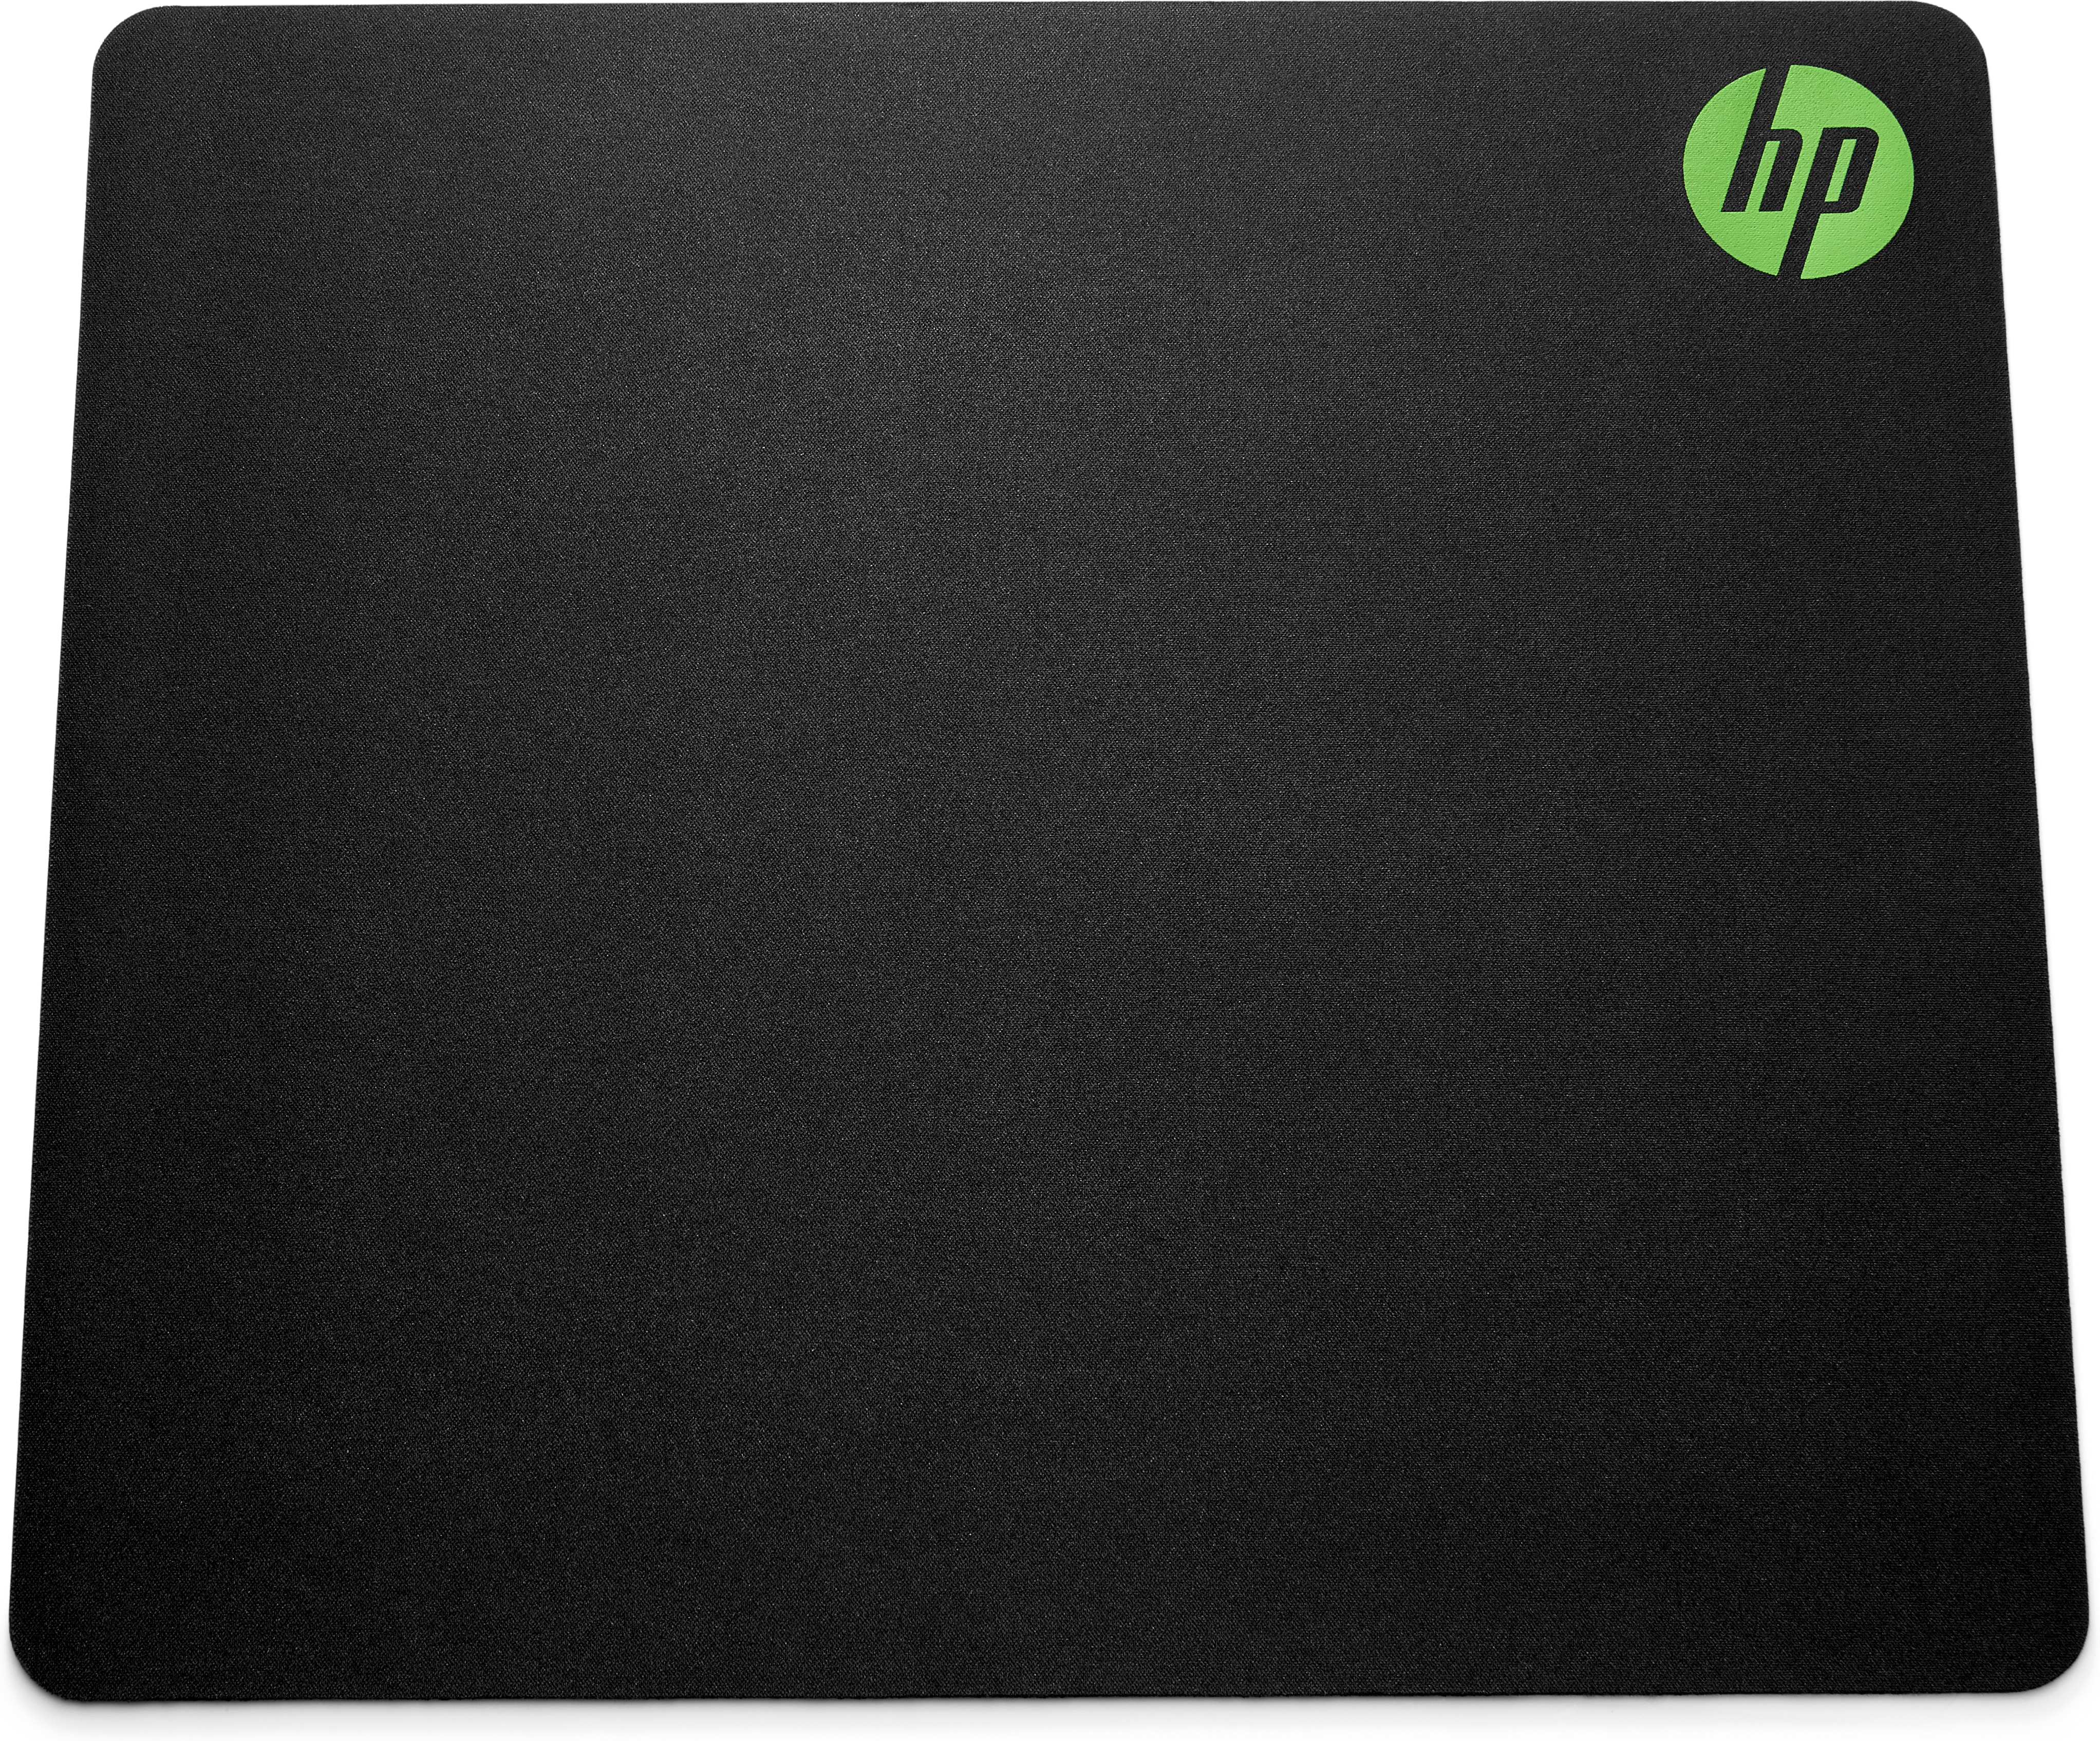 HP Pavilion 300 Black/Green Gaming Mousepad